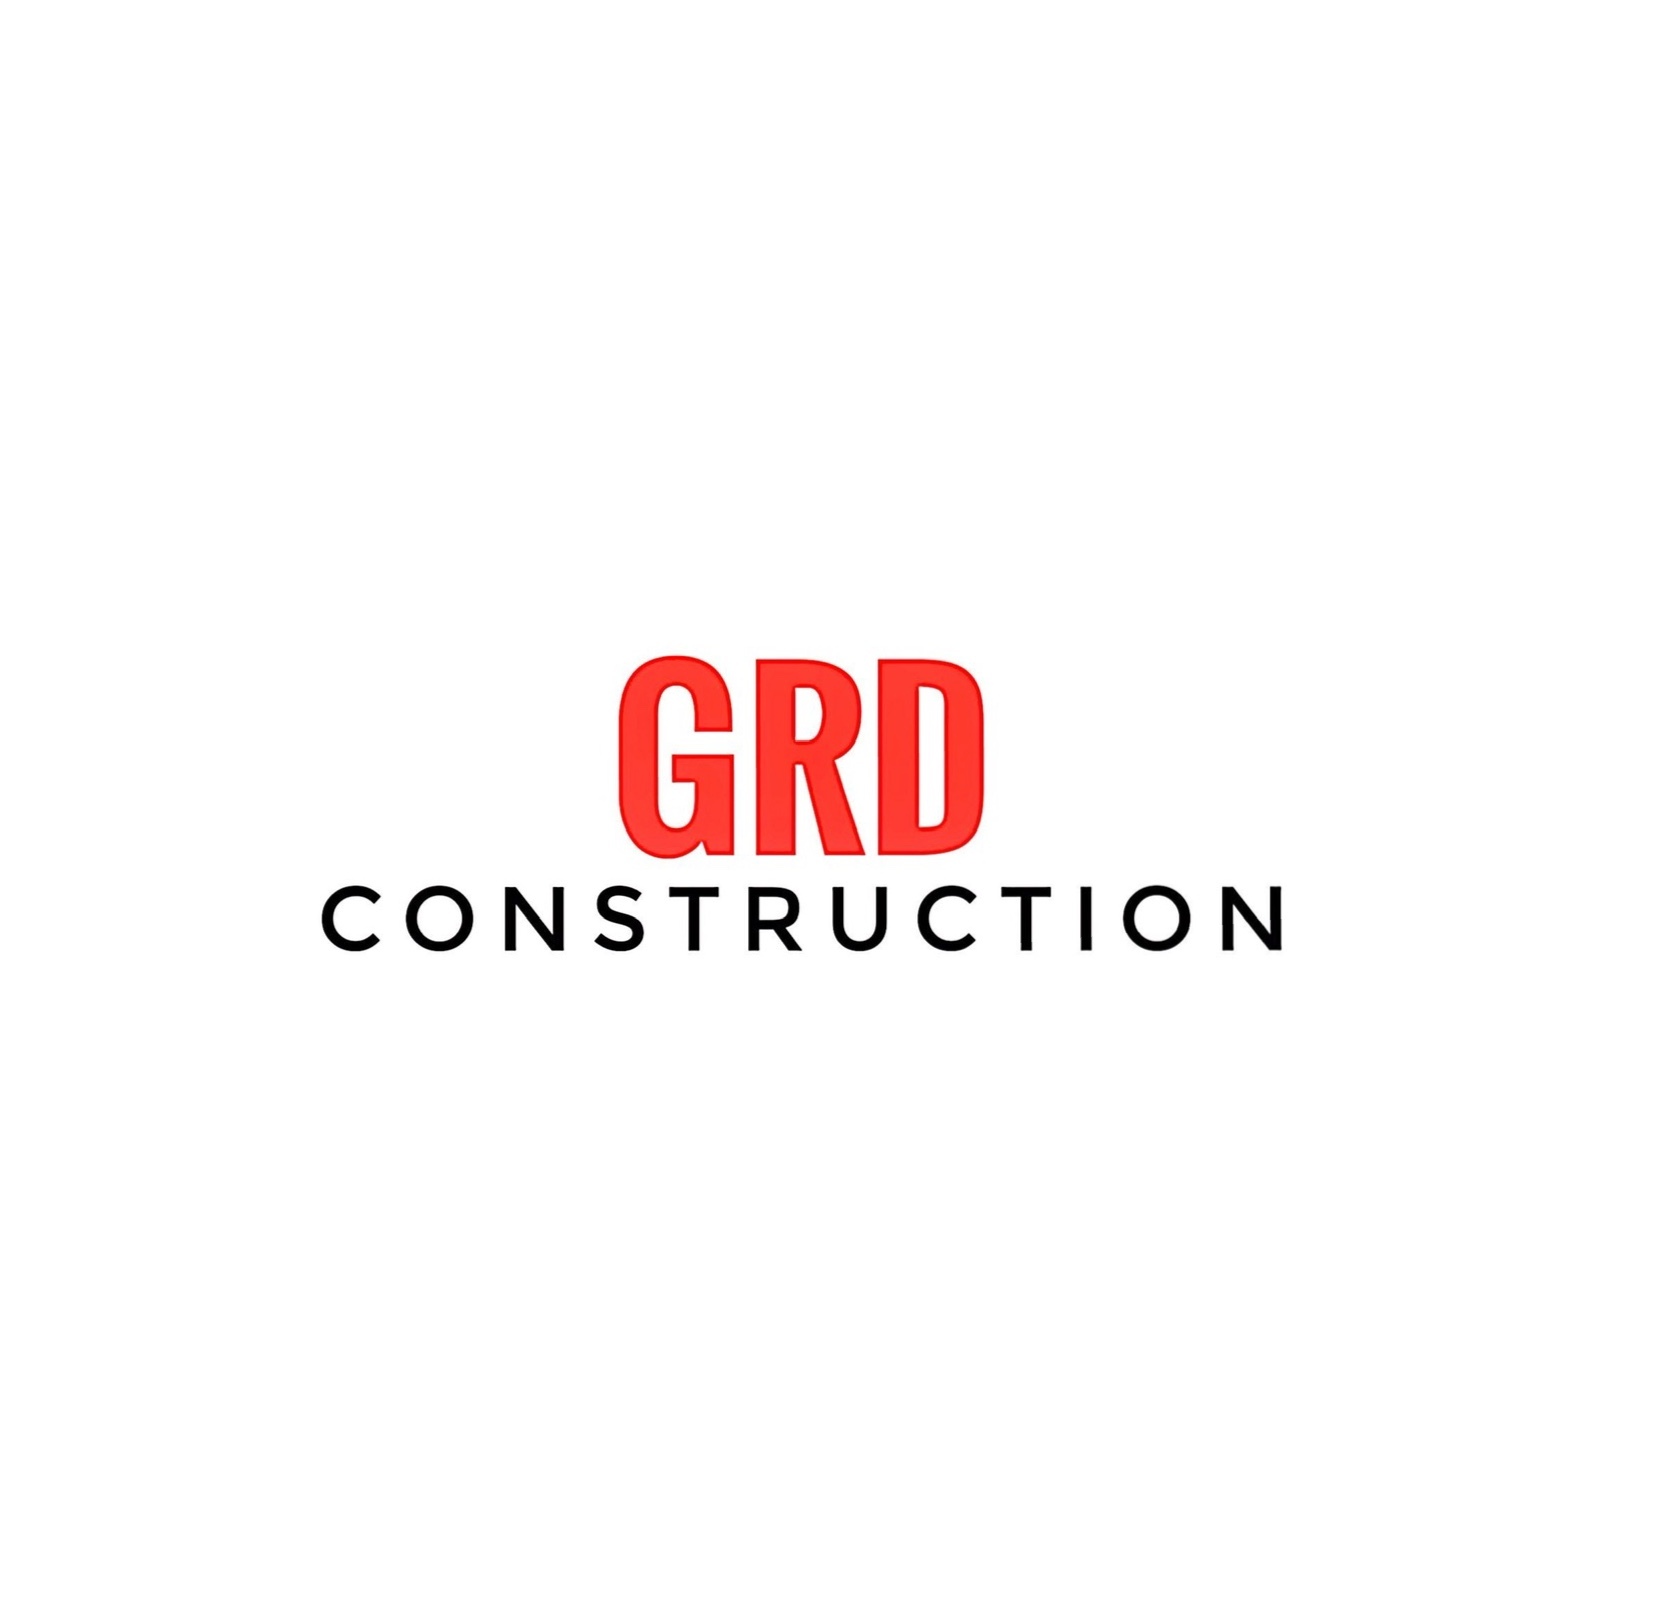 grd construction's logo